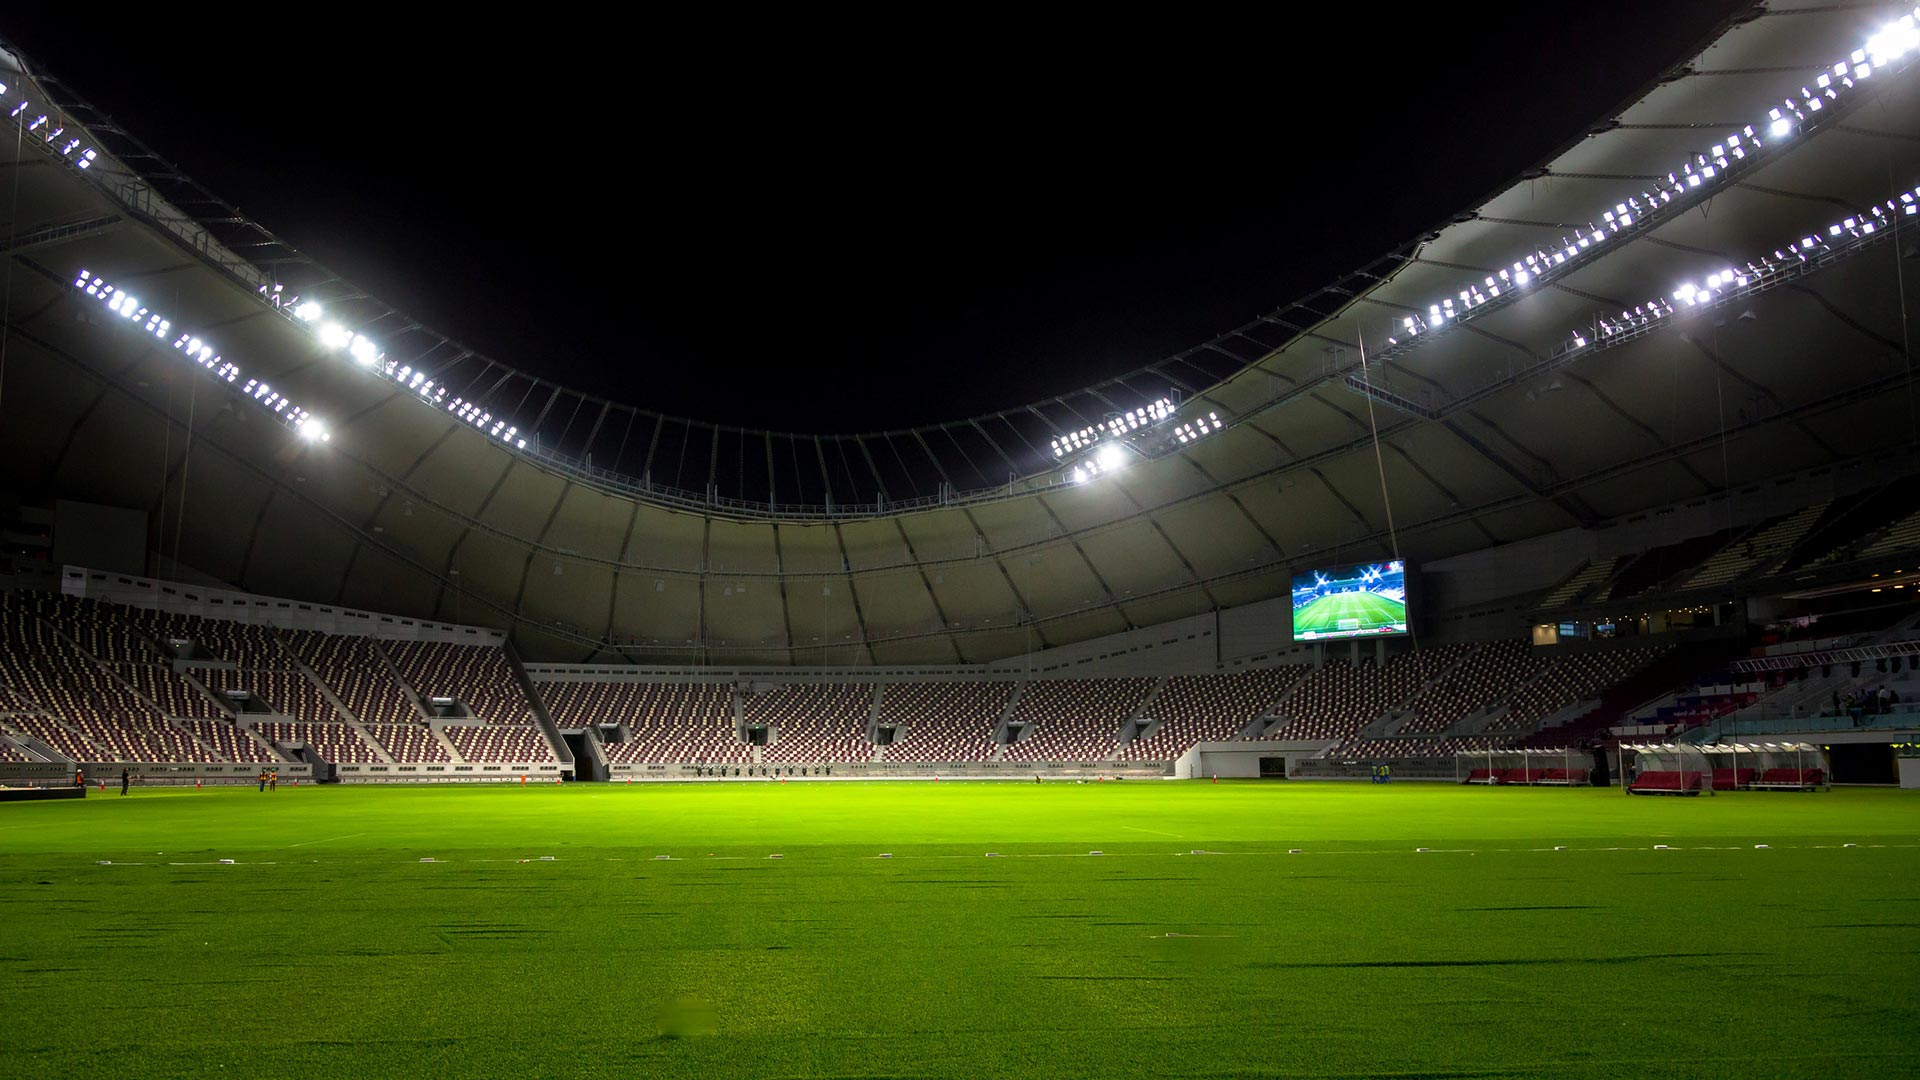 Stadium and sport lighting lens